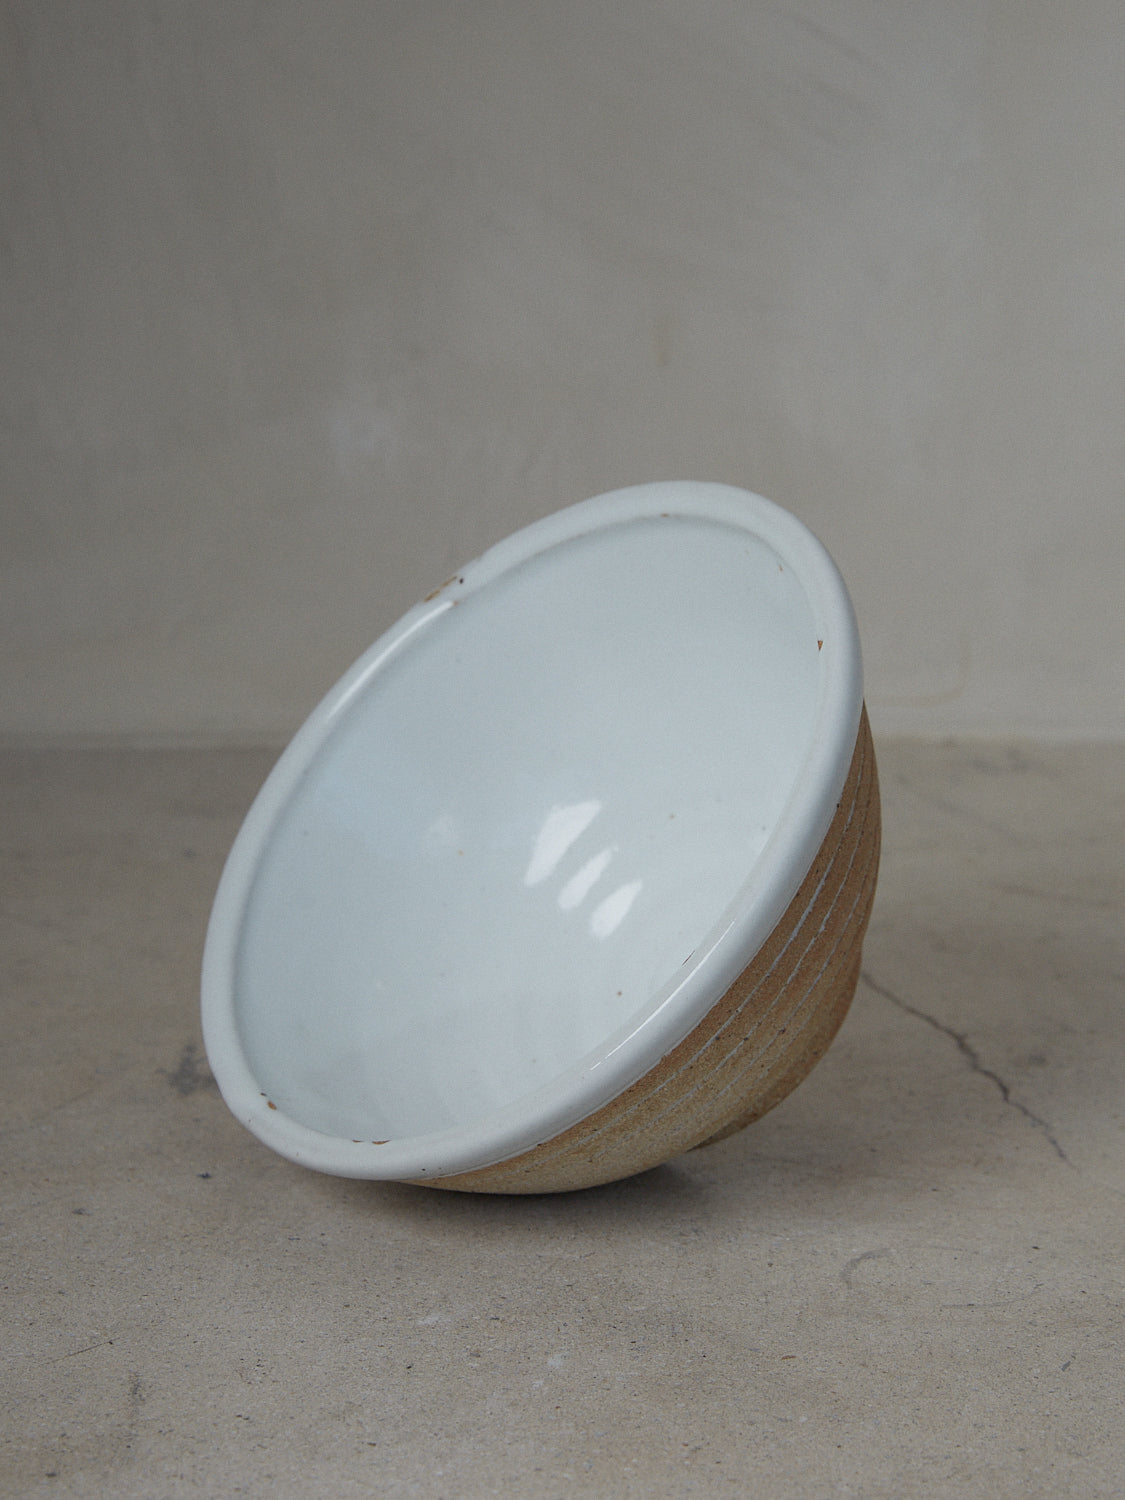 Stone Shinogi Bowl. Limited edition. One-of-a-kind, hand-thrown, footed stoneware bowl with horizontal Japanese Shinogi style ridge pattern.